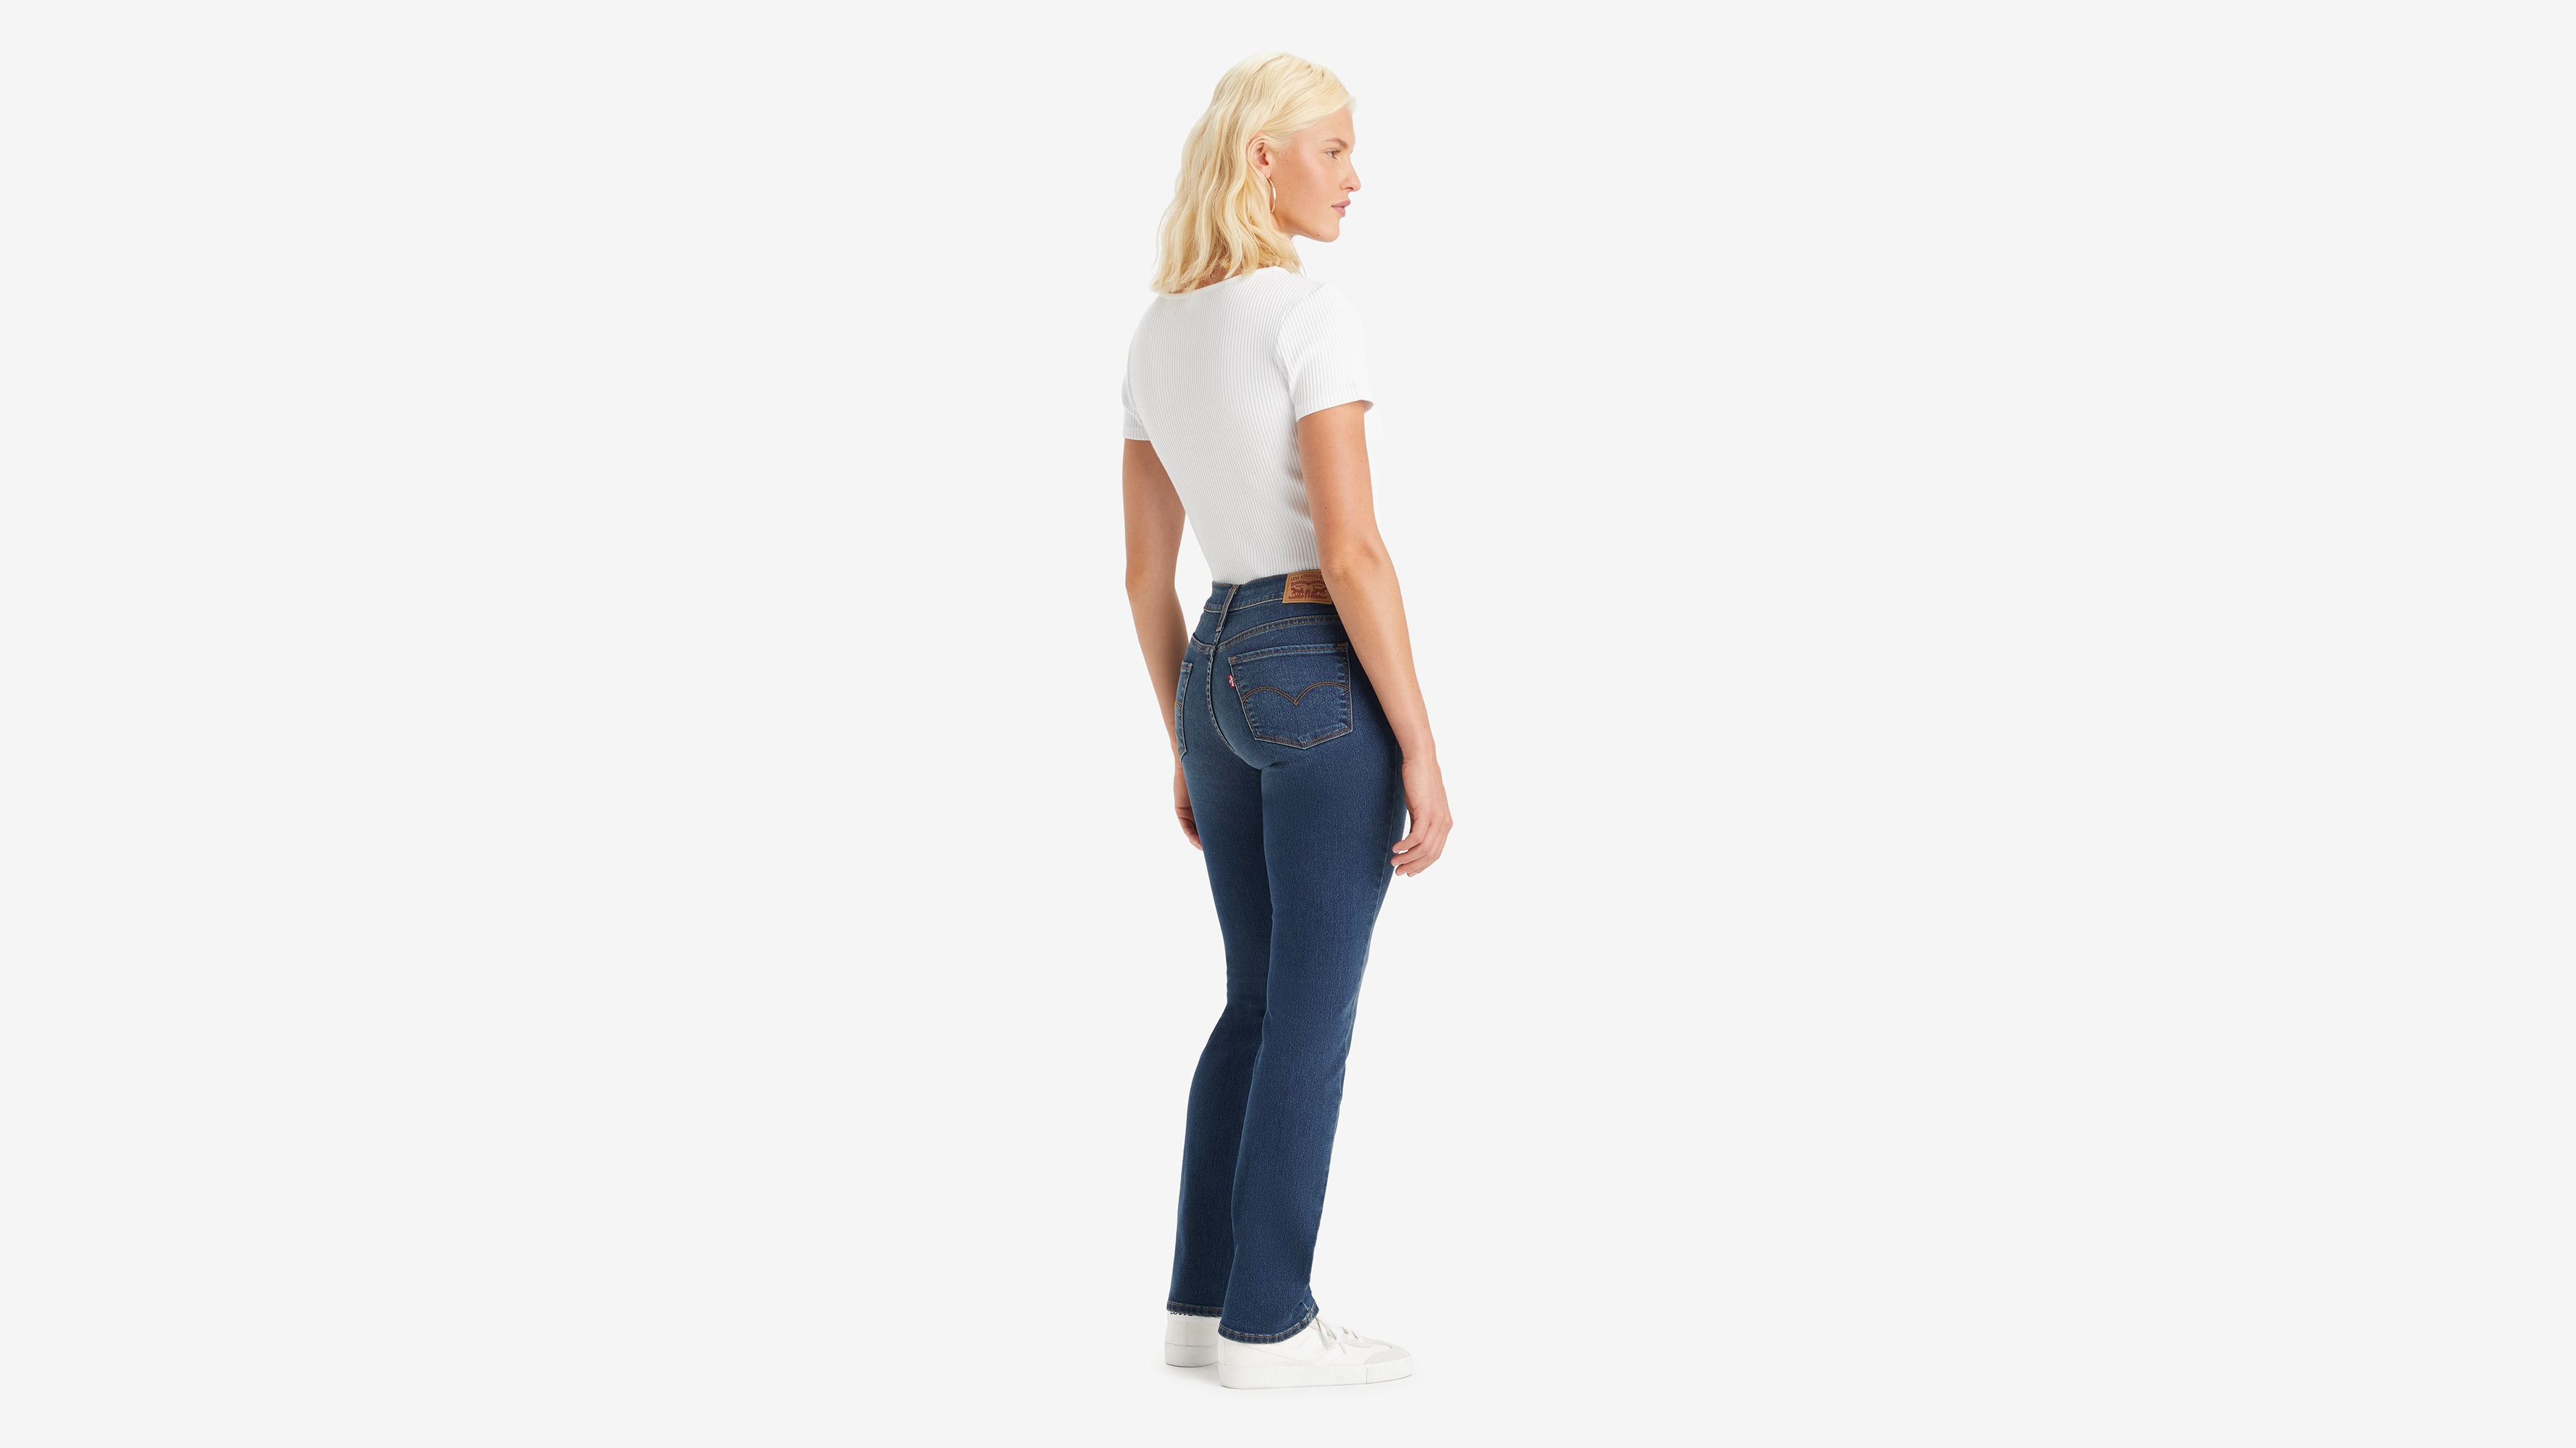 NWOT Women Blue Spice Jeans, Size 3/4 Waist 28-31, Inseam 30